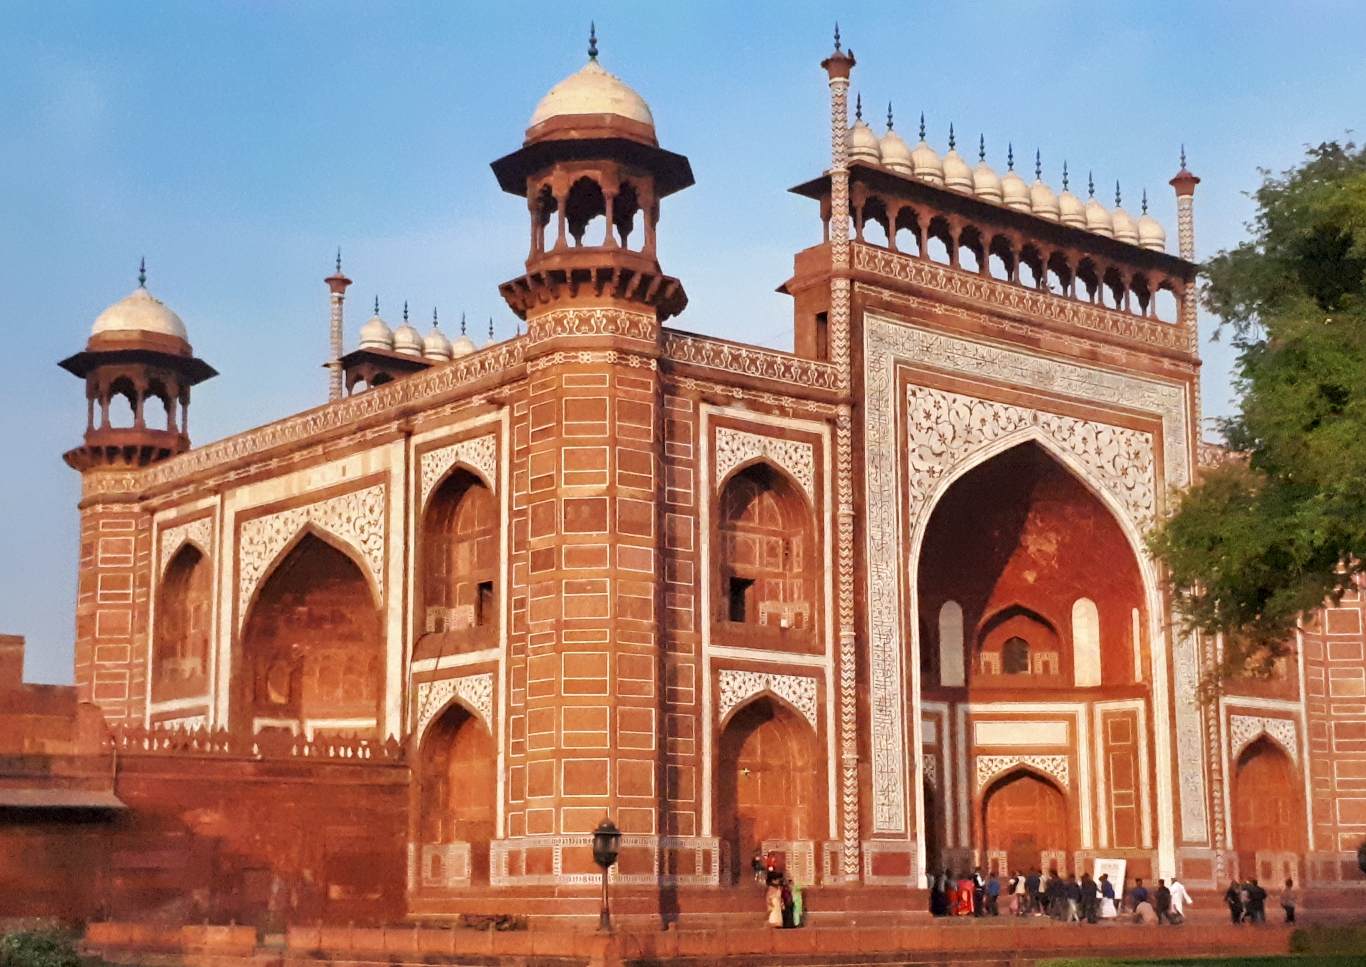 Palace in India near Taj Mahal